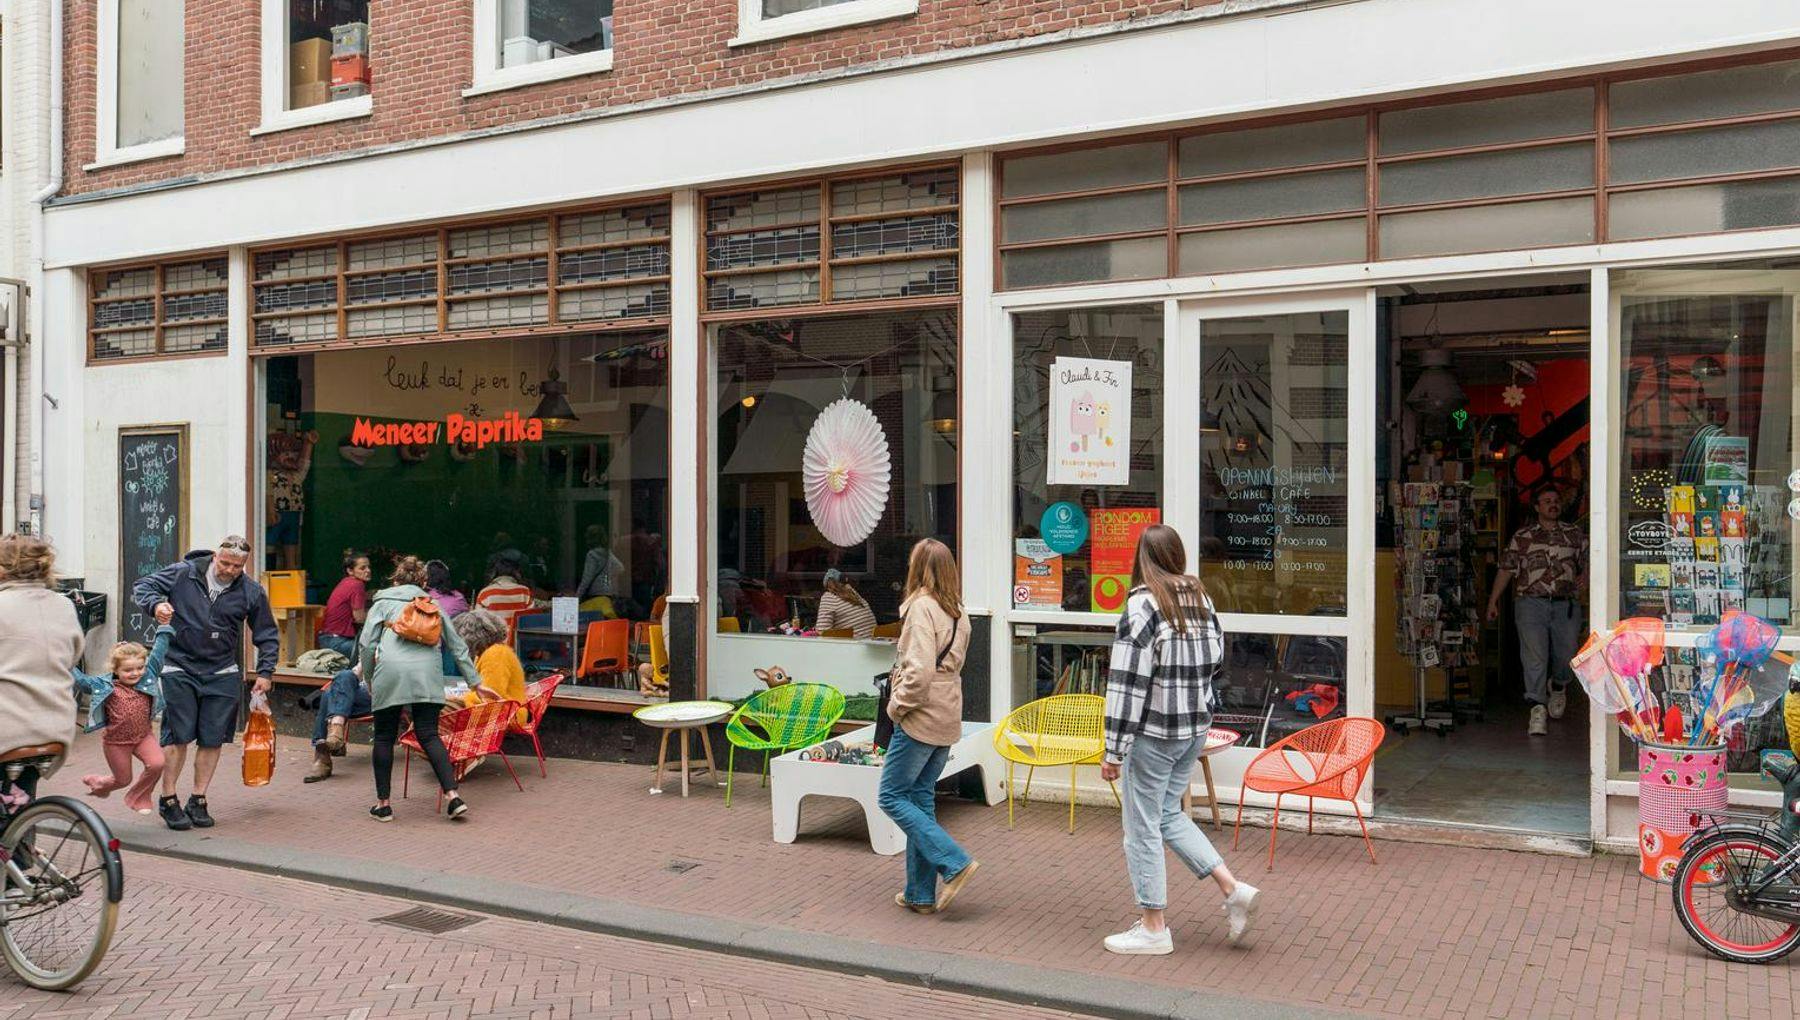 The entrance of Meneer Paprika café and toyshop in Haarlem.